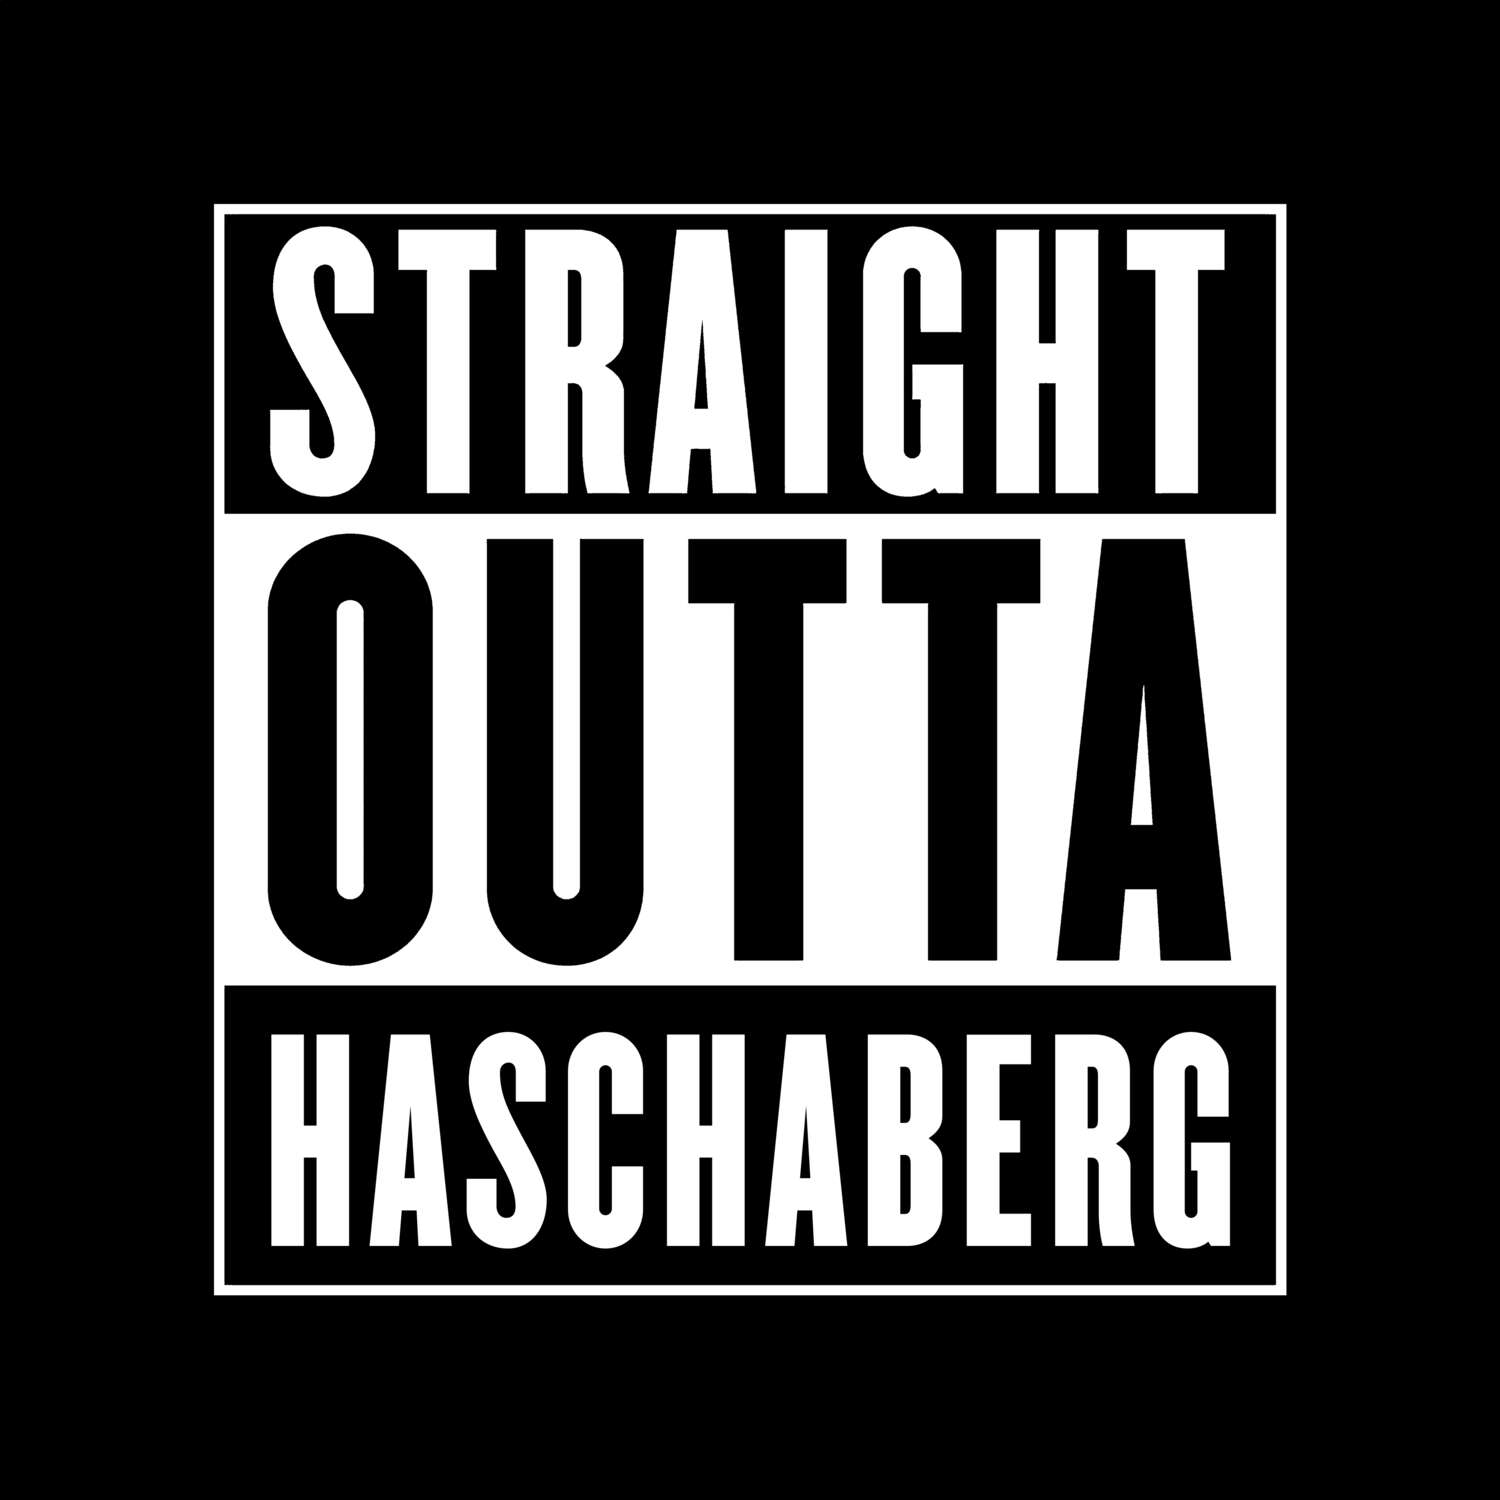 Haschaberg T-Shirt »Straight Outta«